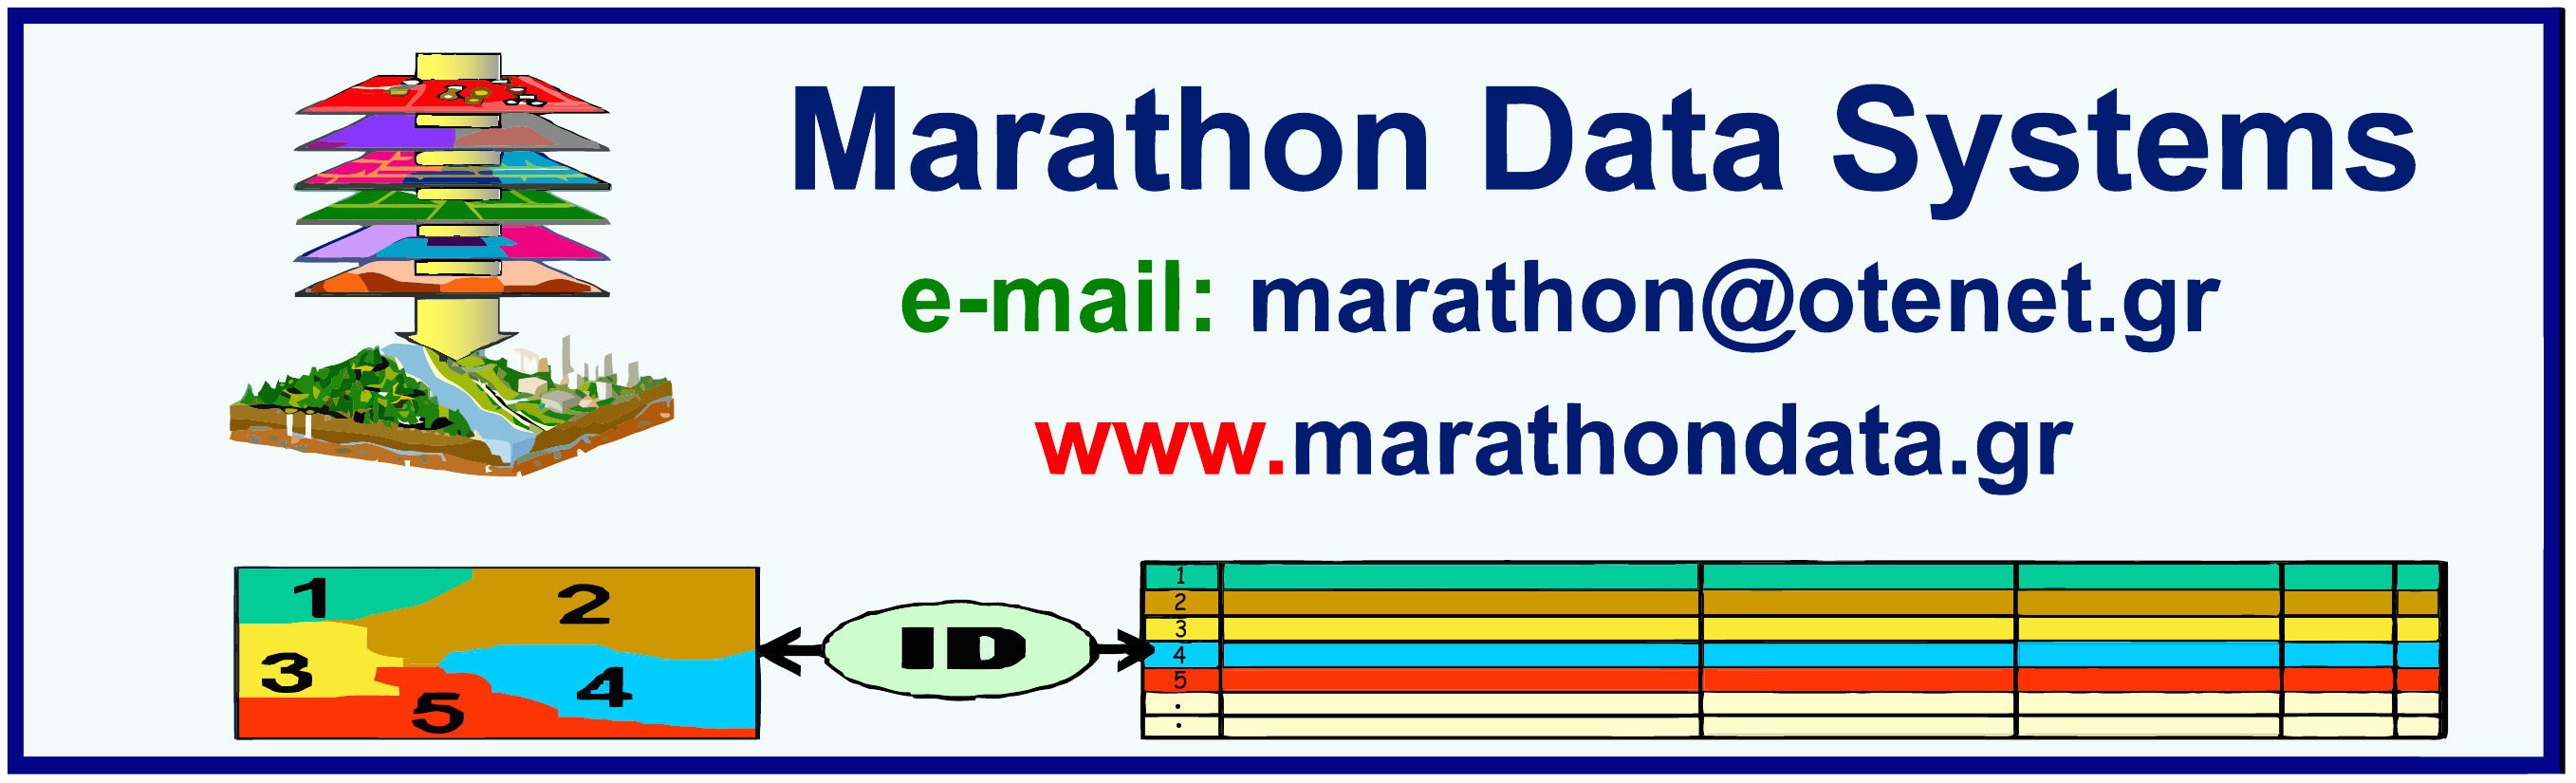 Marathon Data Systems logo